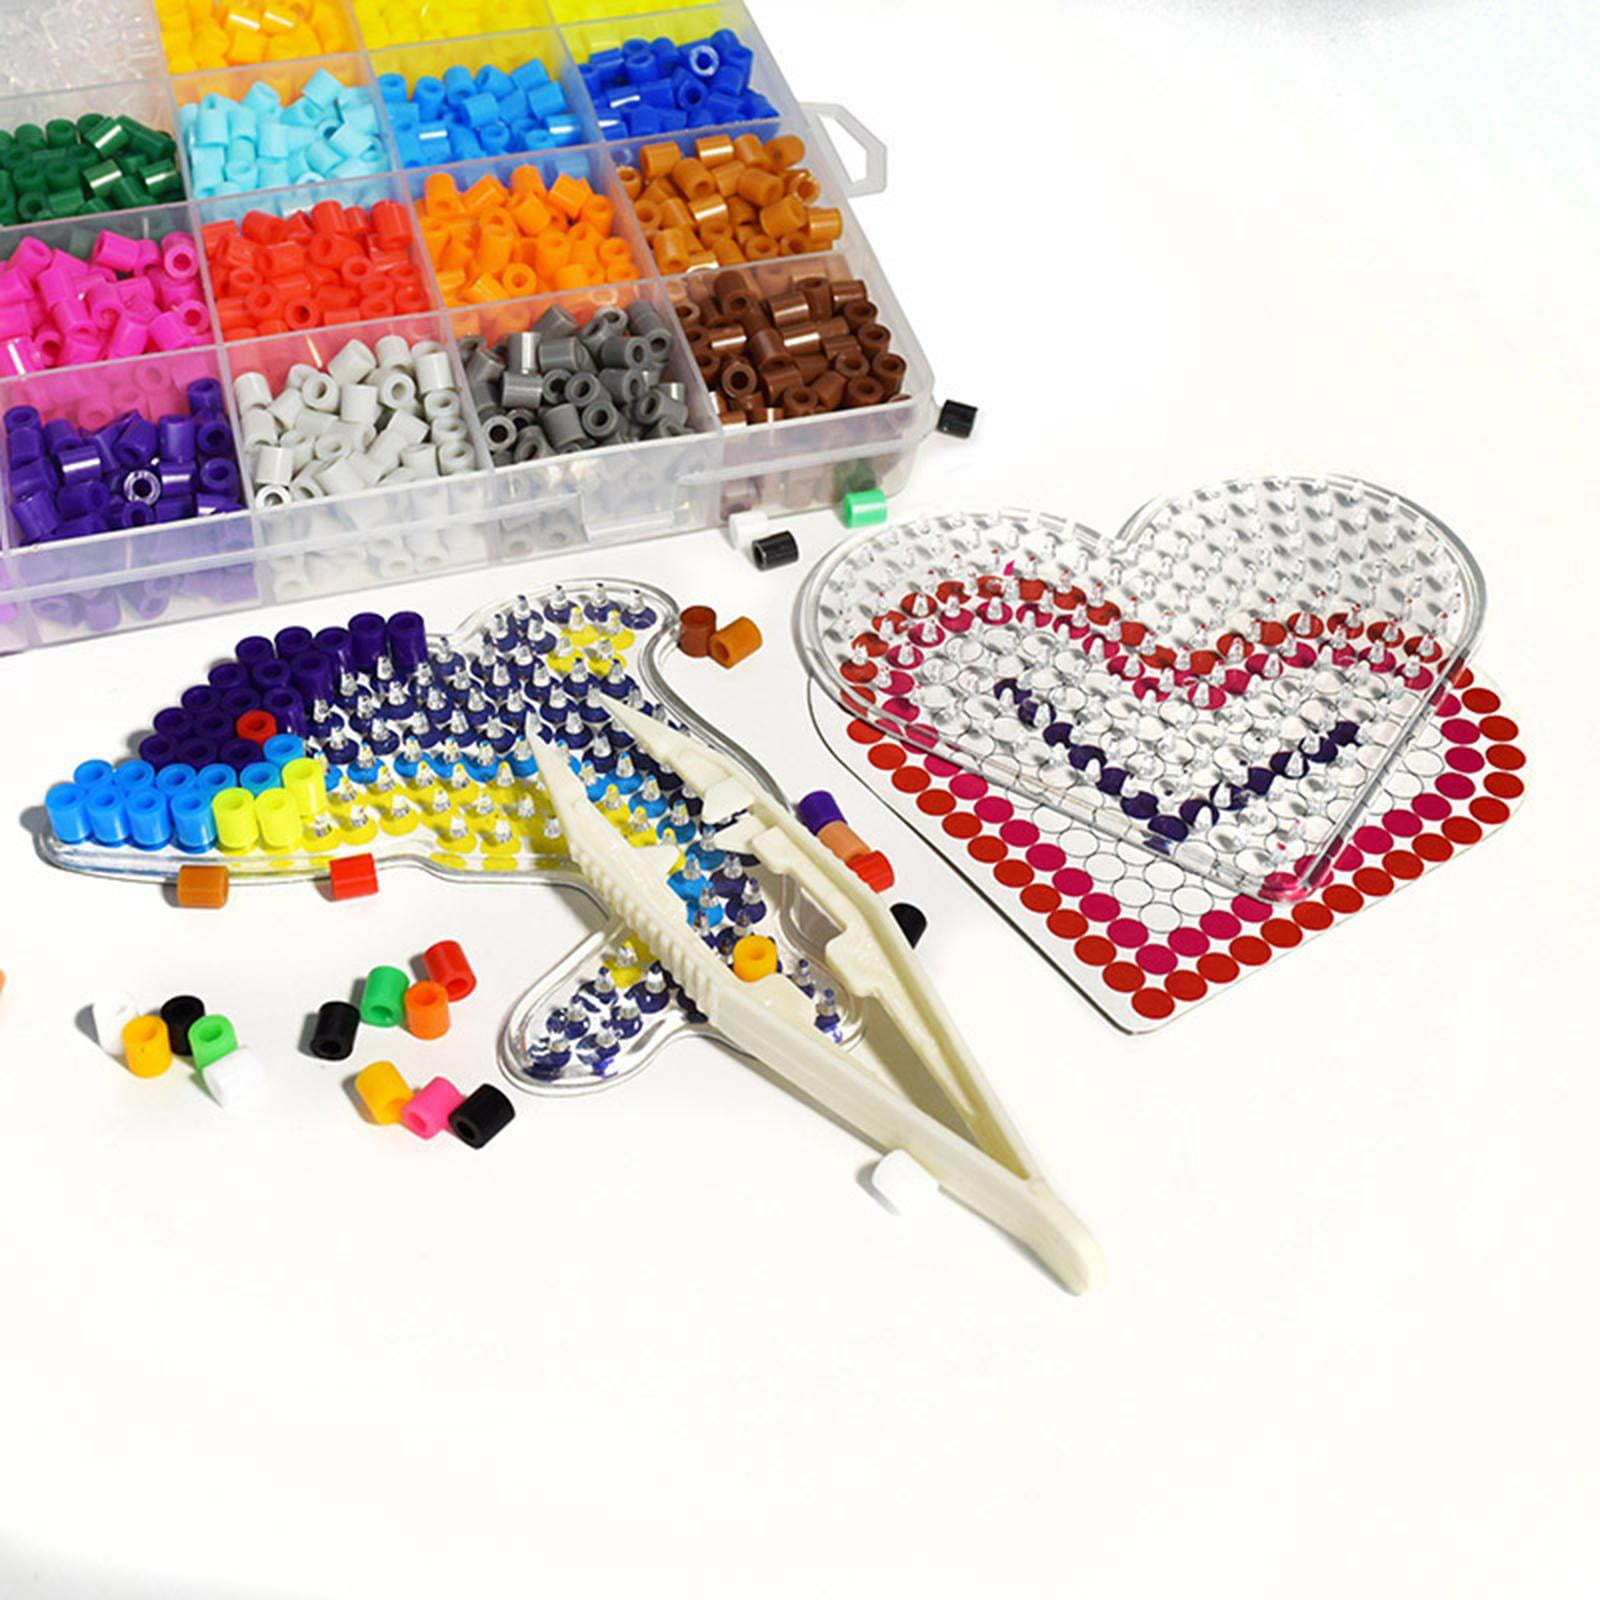 2400x Beads Kit Crafting Melting for Starter Educational Making, Women's, Size: 18x12x3CM